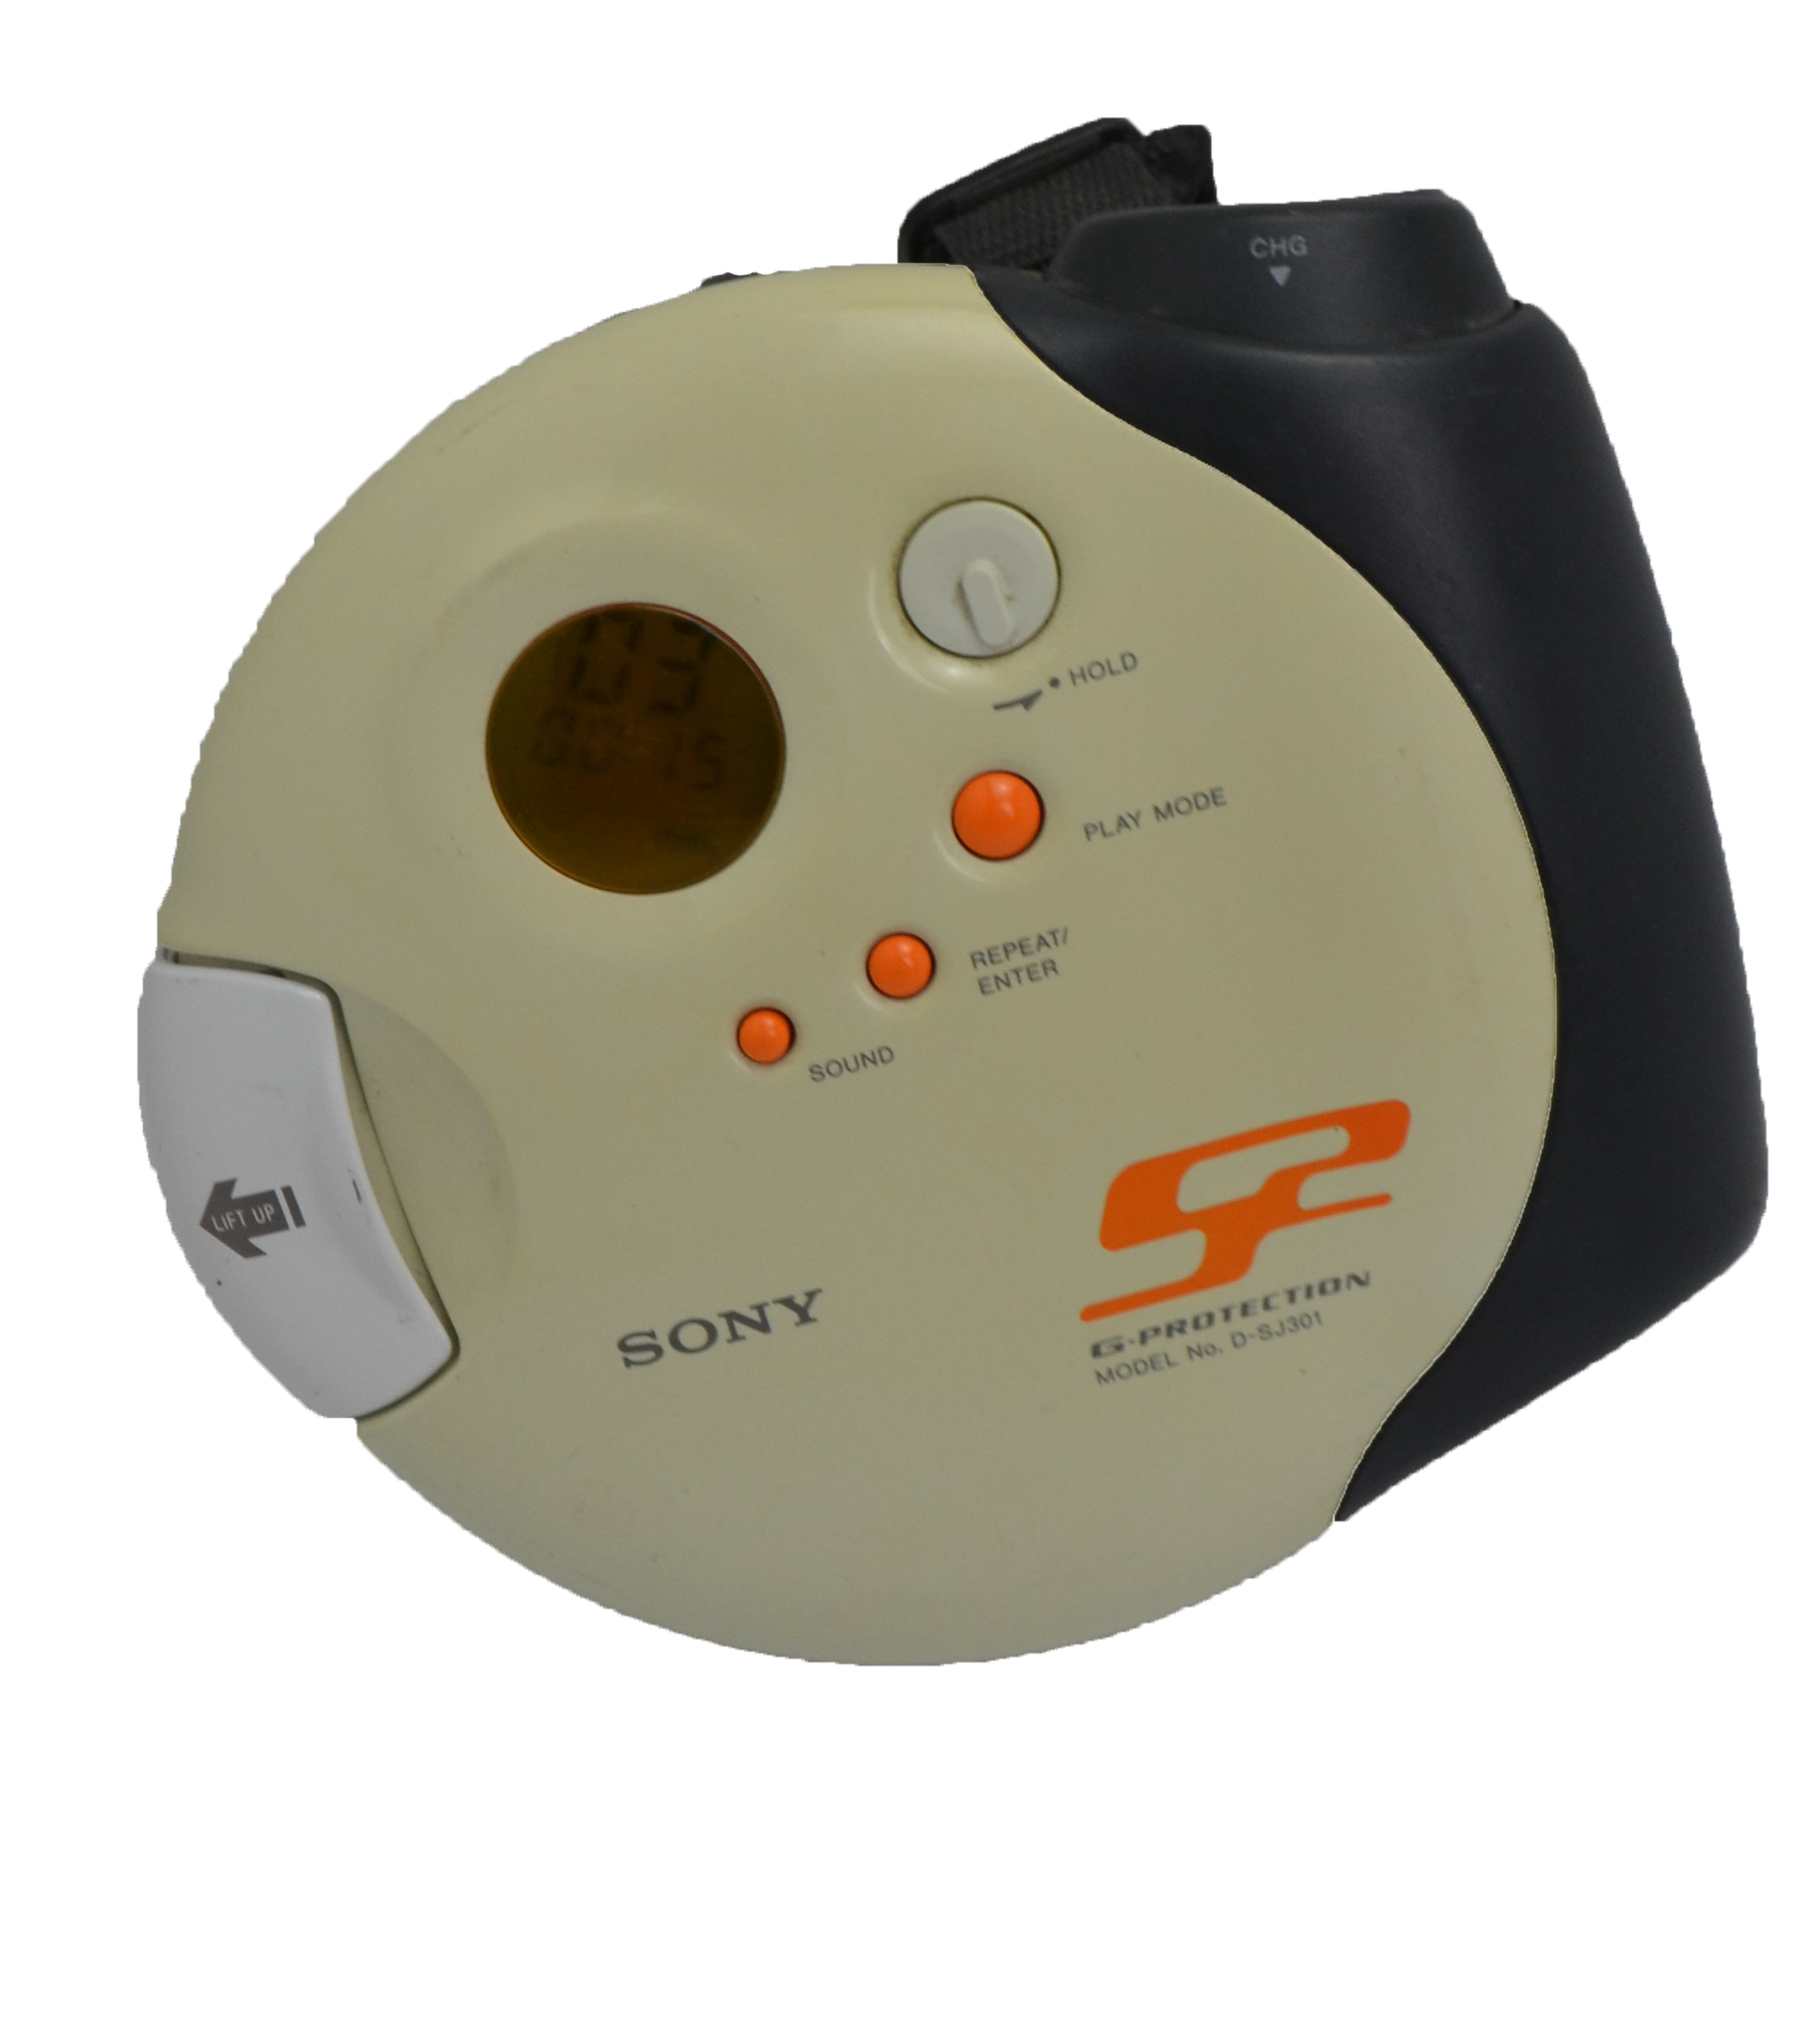 Sony Sports Orange/White Portable CD Walkman Player G-Protection (D-SJ